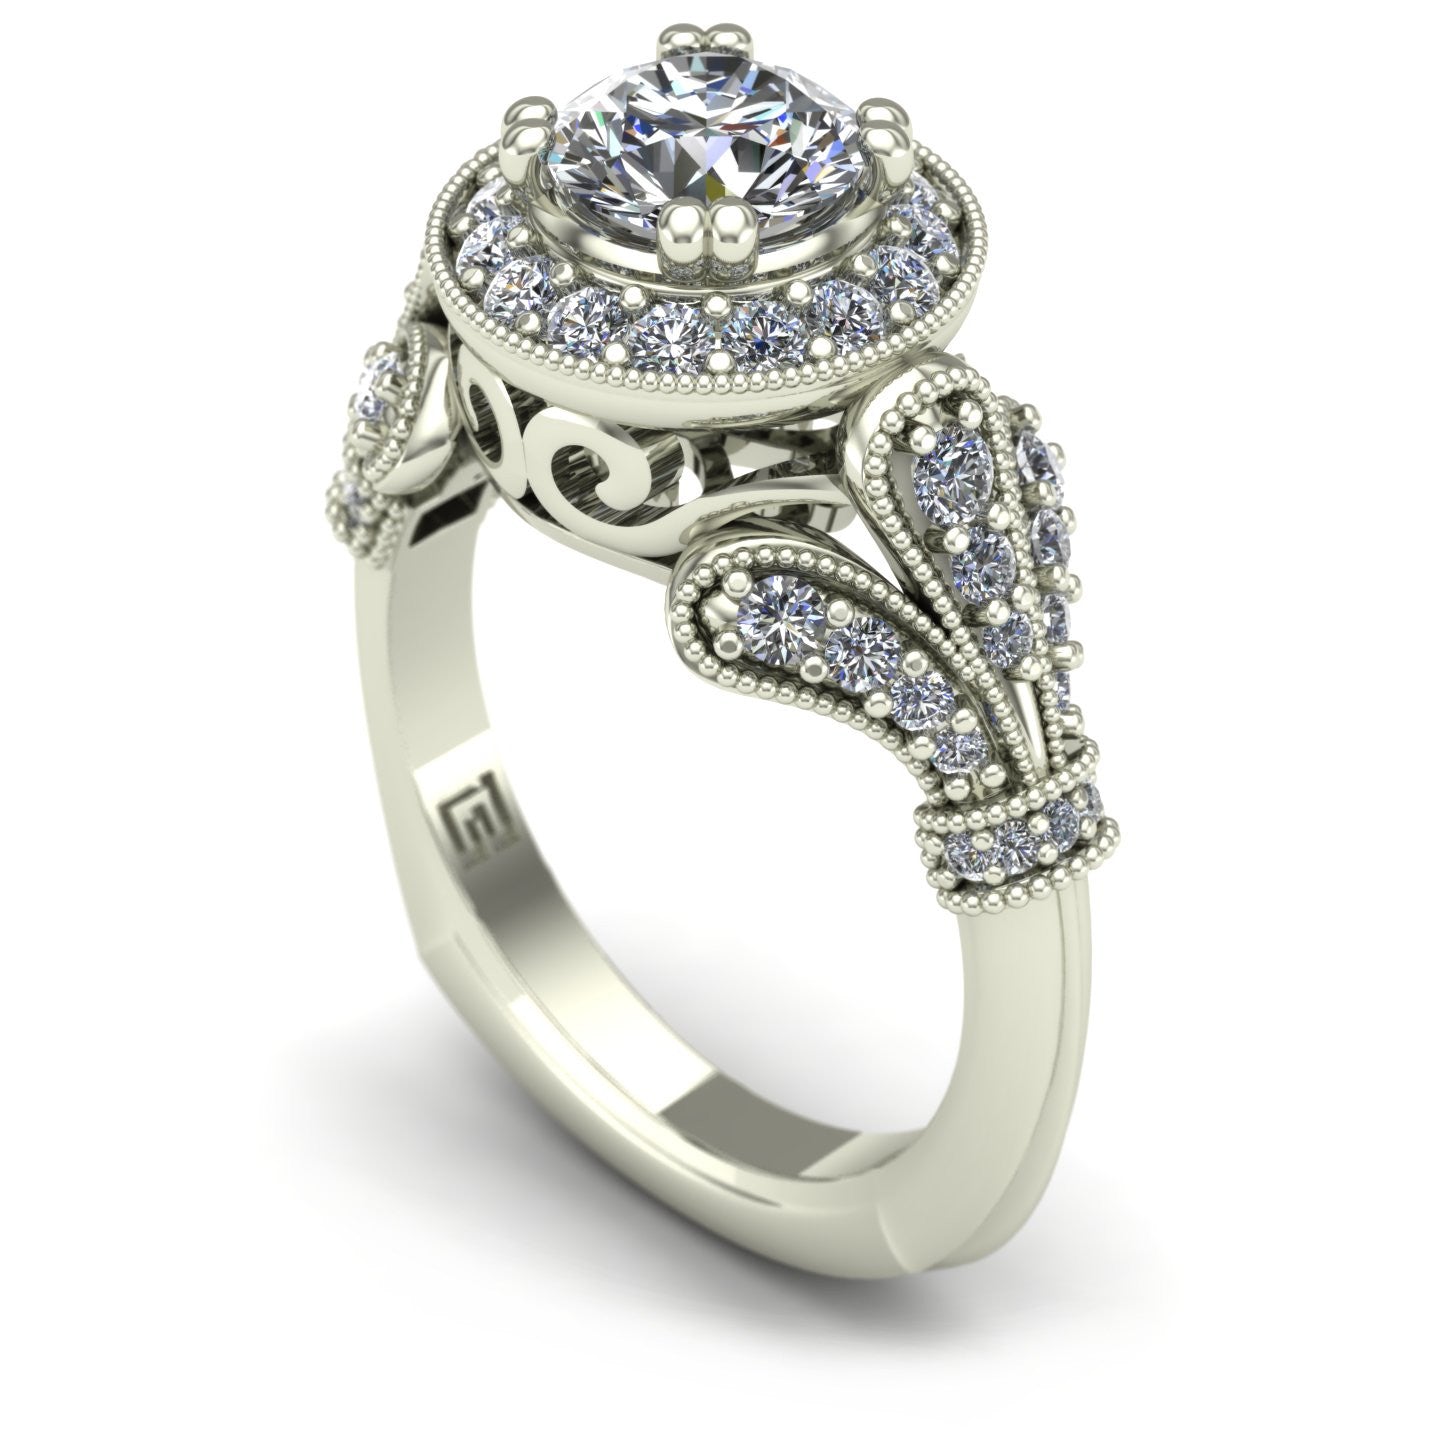 1ct Diamond halo fleur de lis engagement ring in 18k white gold - Charles Babb Designs